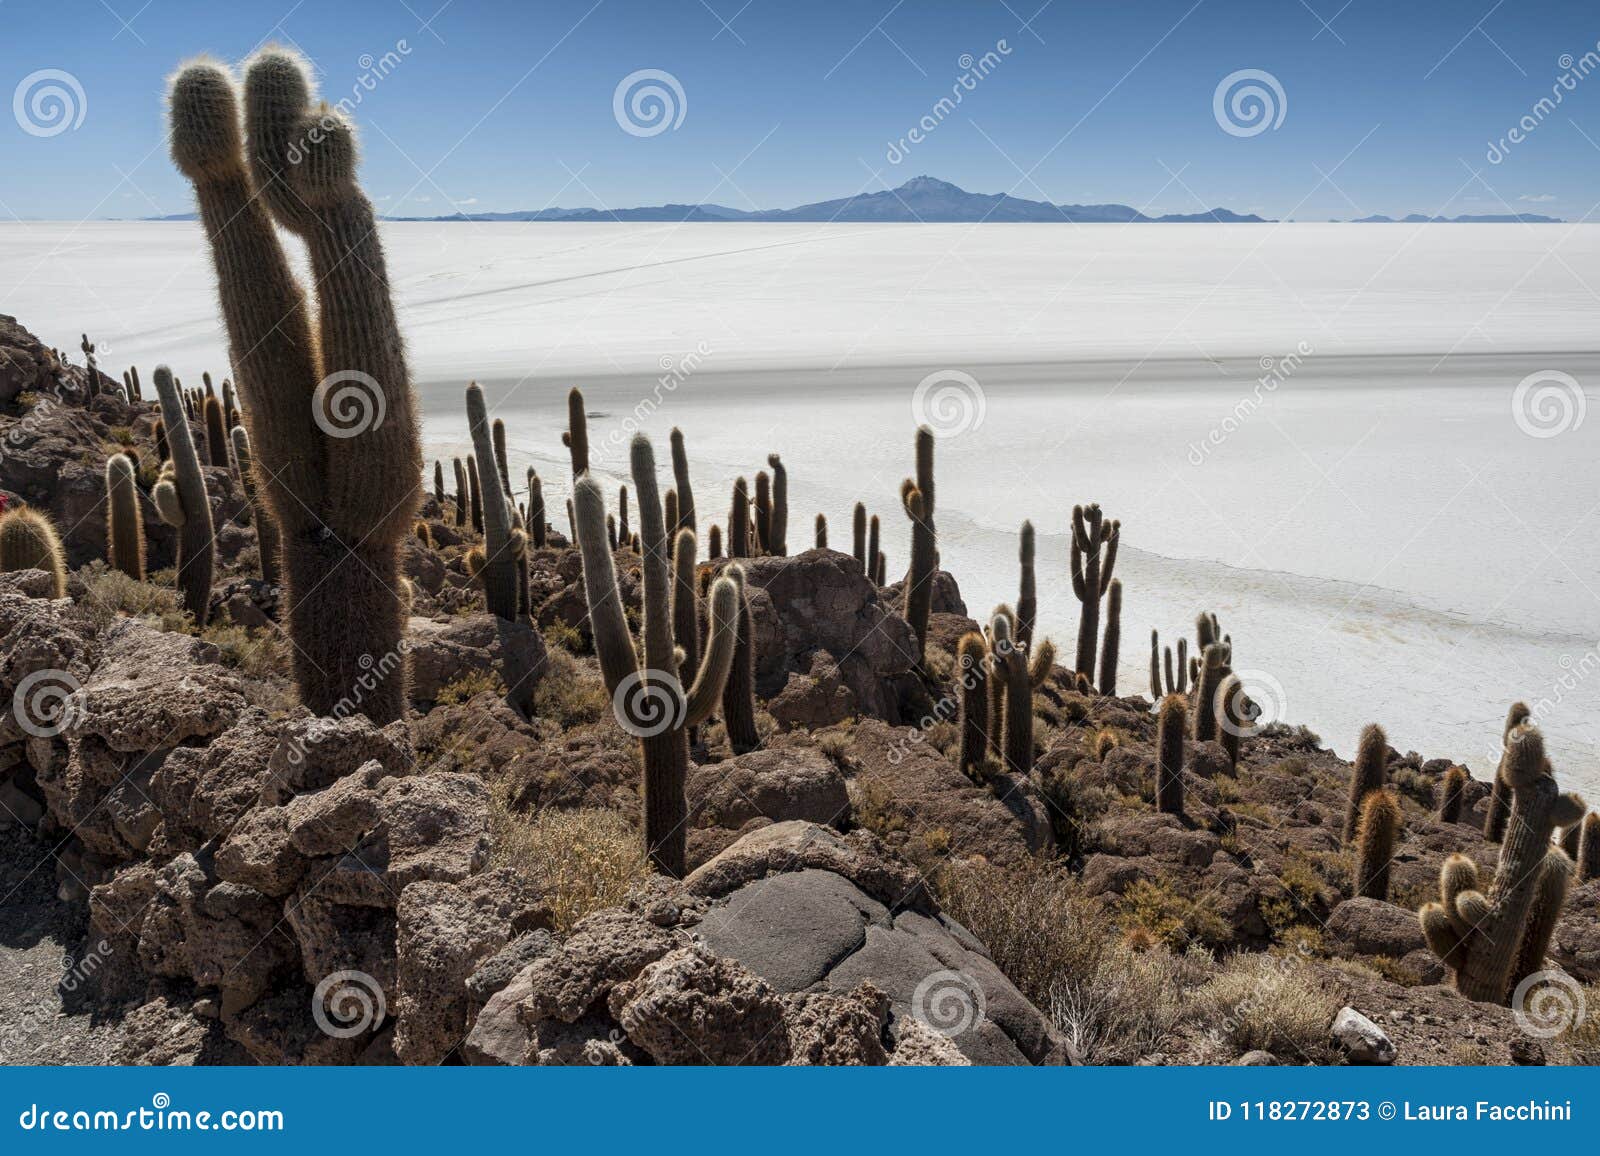 trichoreceus cactus on isla incahuasi isla del pescado in the middle of the world`s biggest salt plain salar de uyuni, bolivia